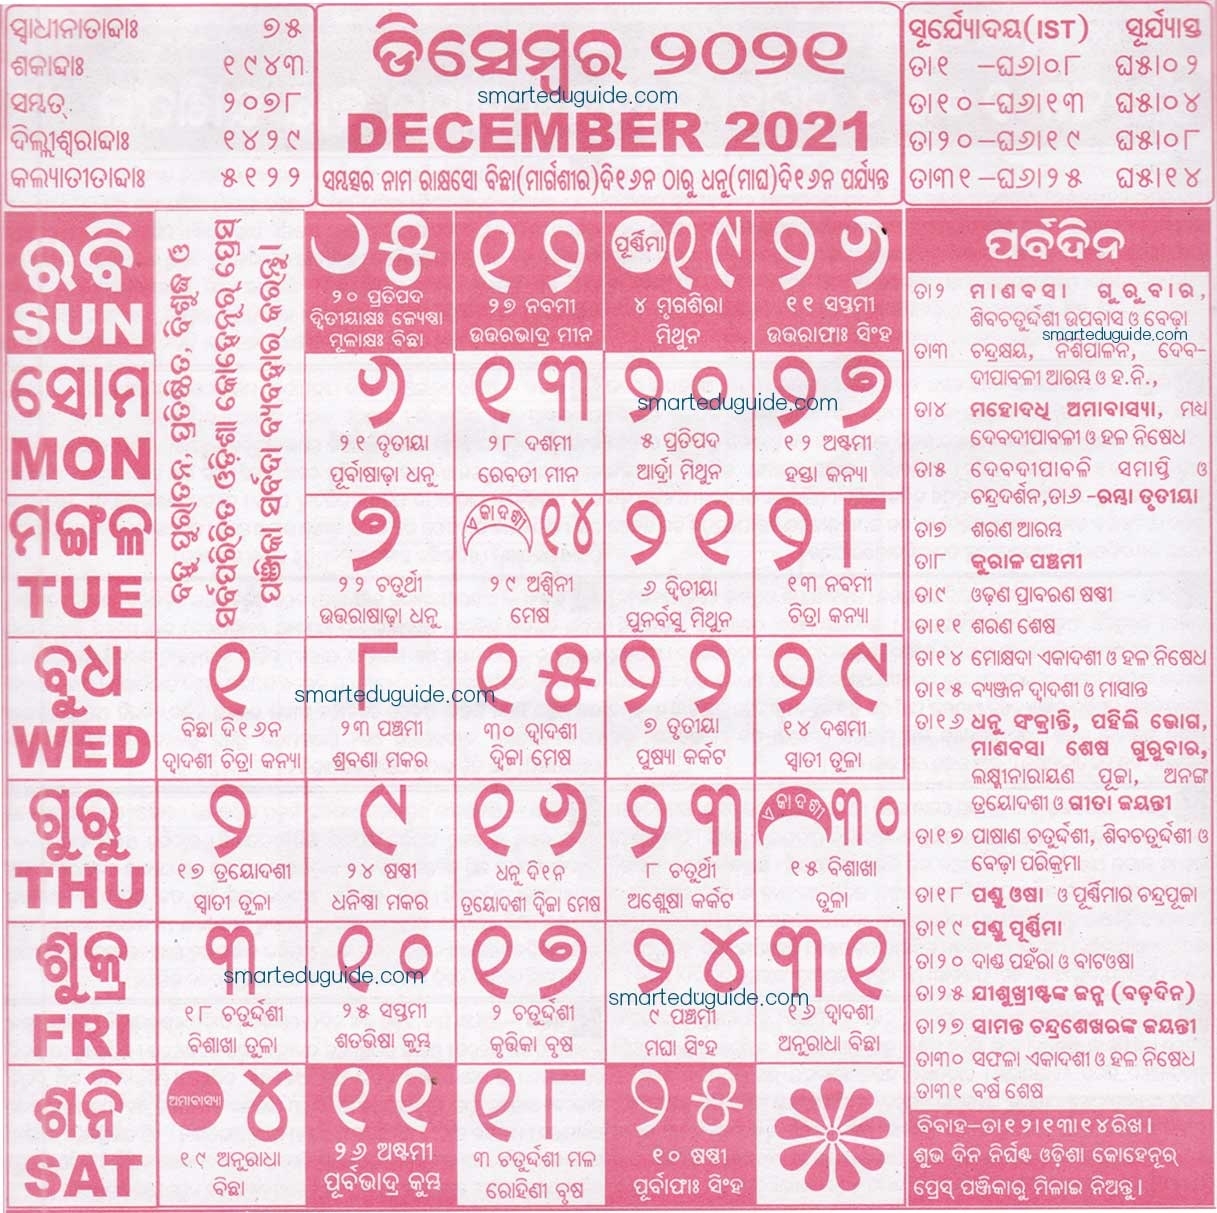 Kohinoor Odia Calendar 2021 December | Seg Odia June 2021 Calendar